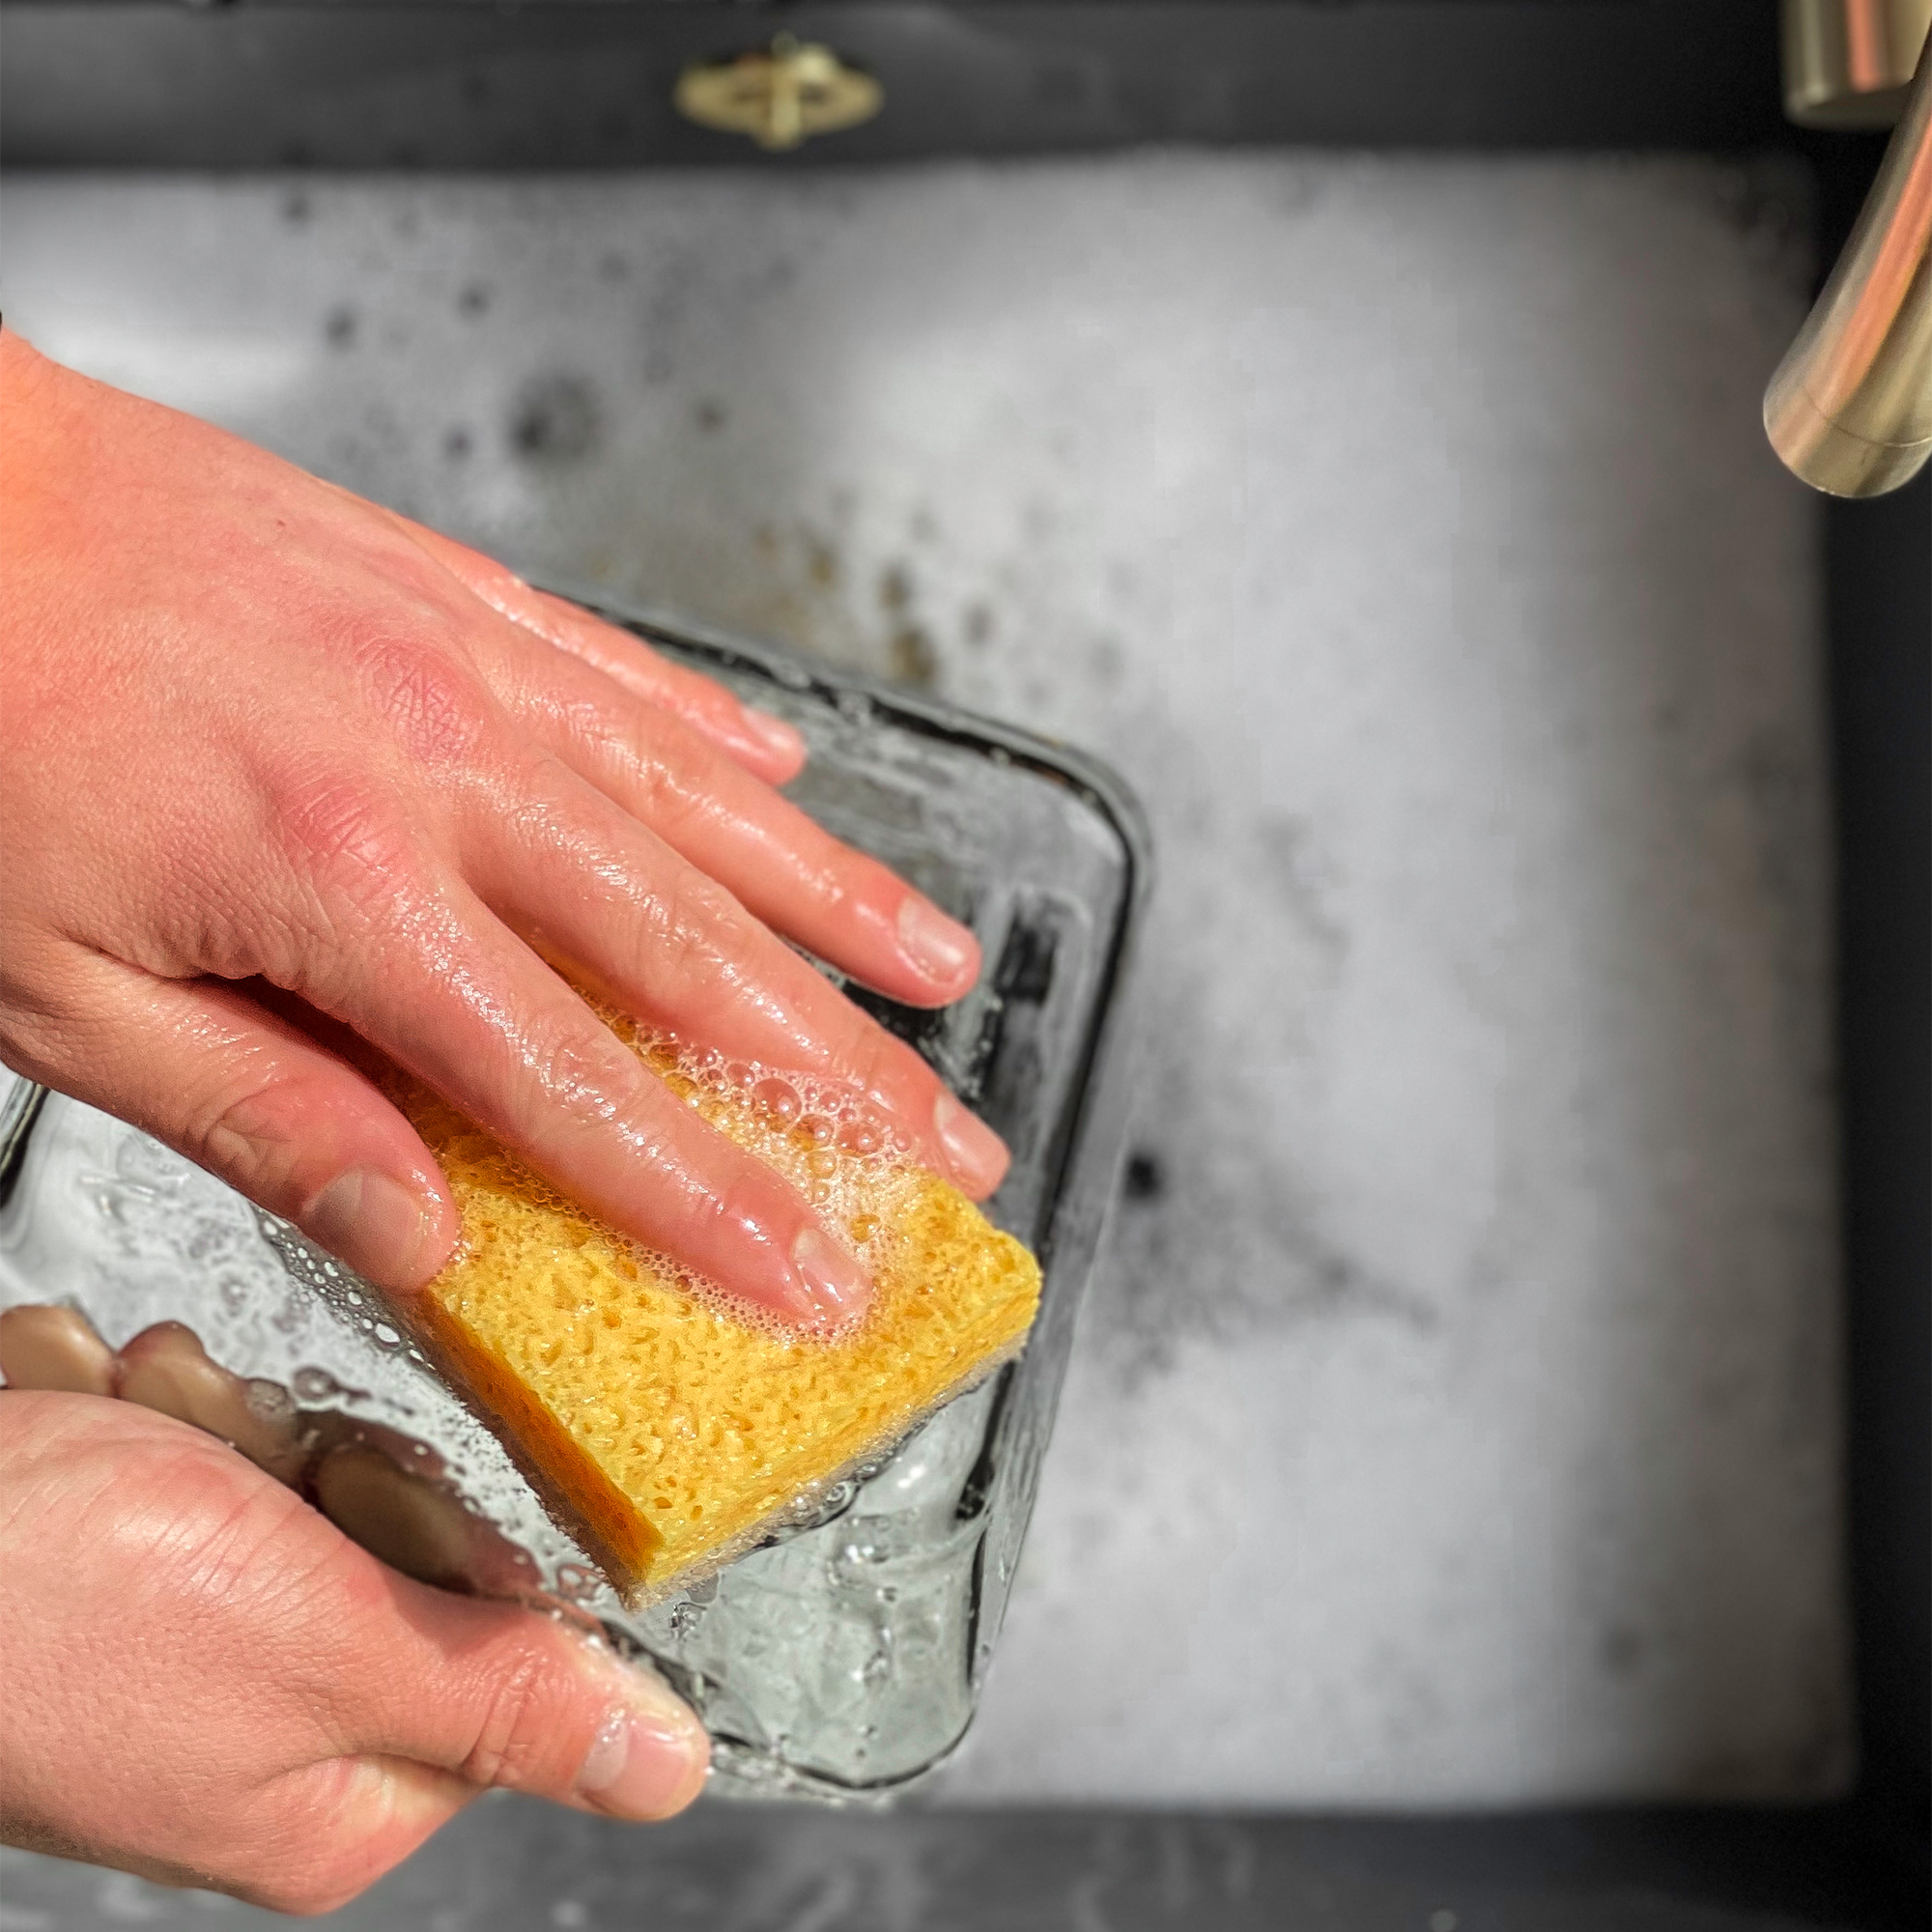 Dish Sponges Dishwashing, Sponges Cleaning Dishes